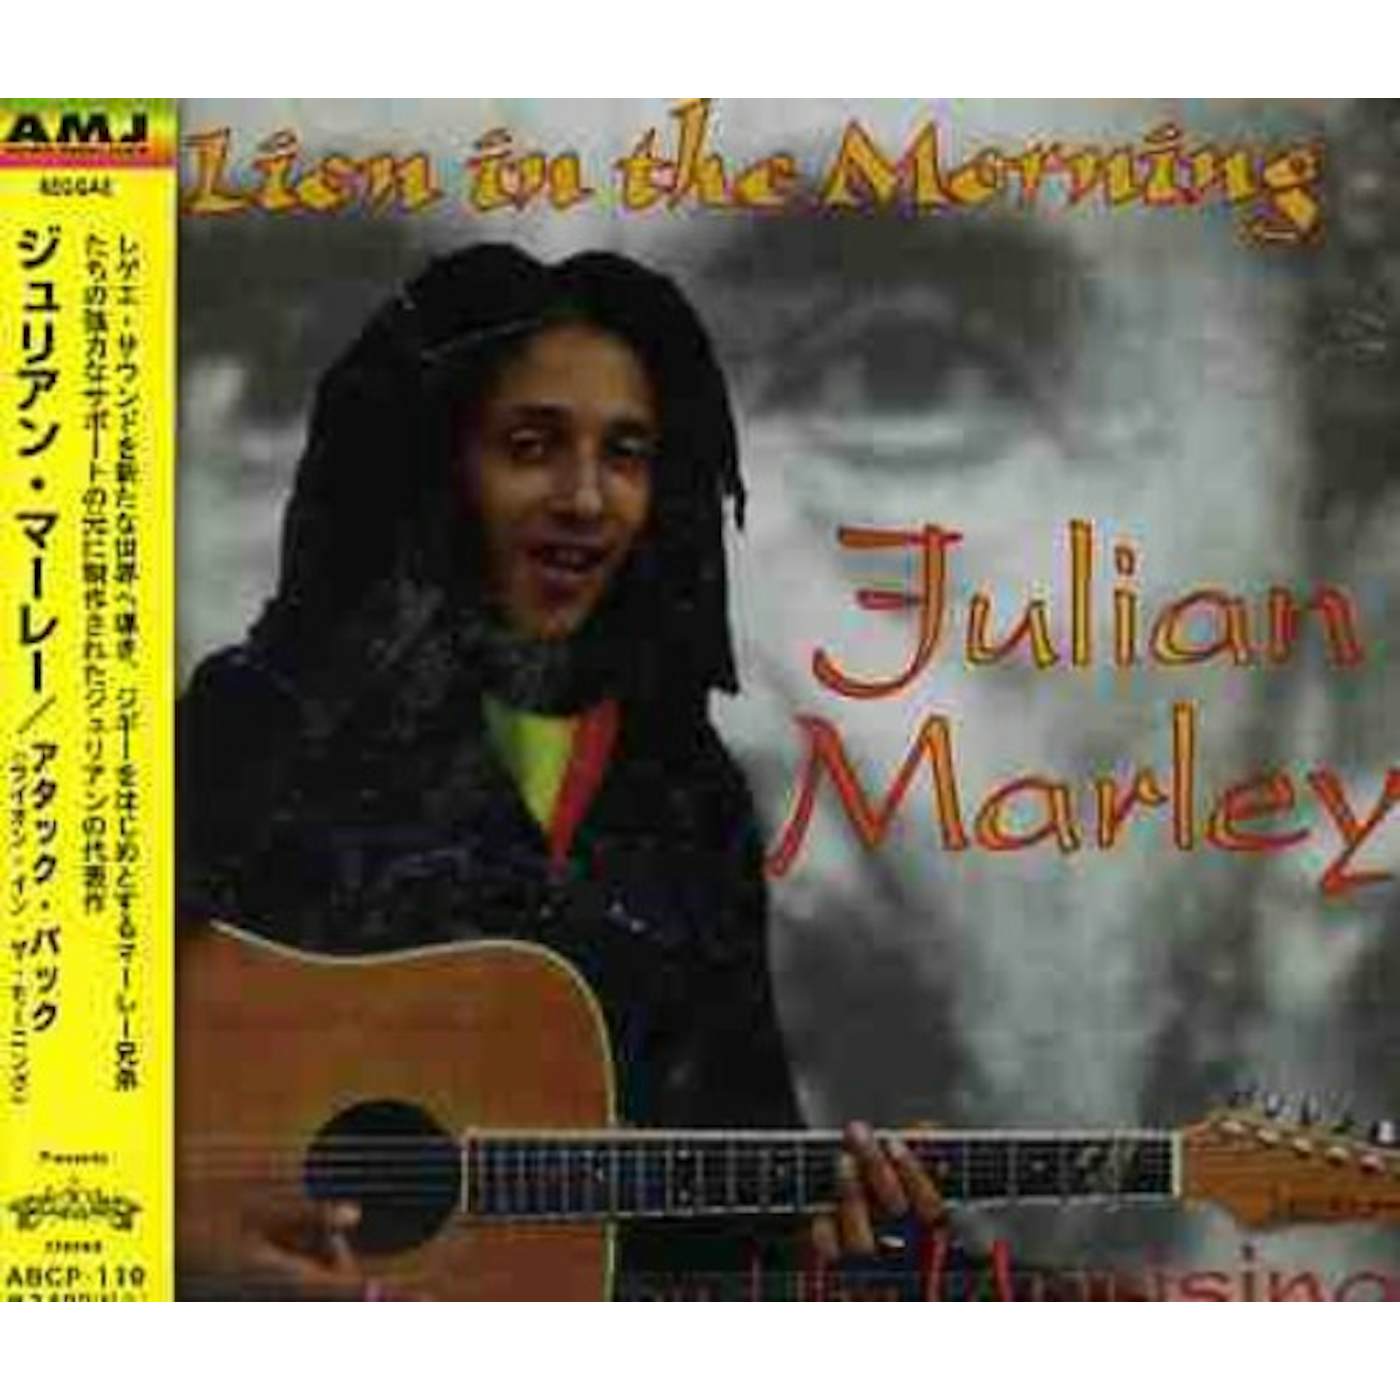 Julian Marley ATTACK BACK CD